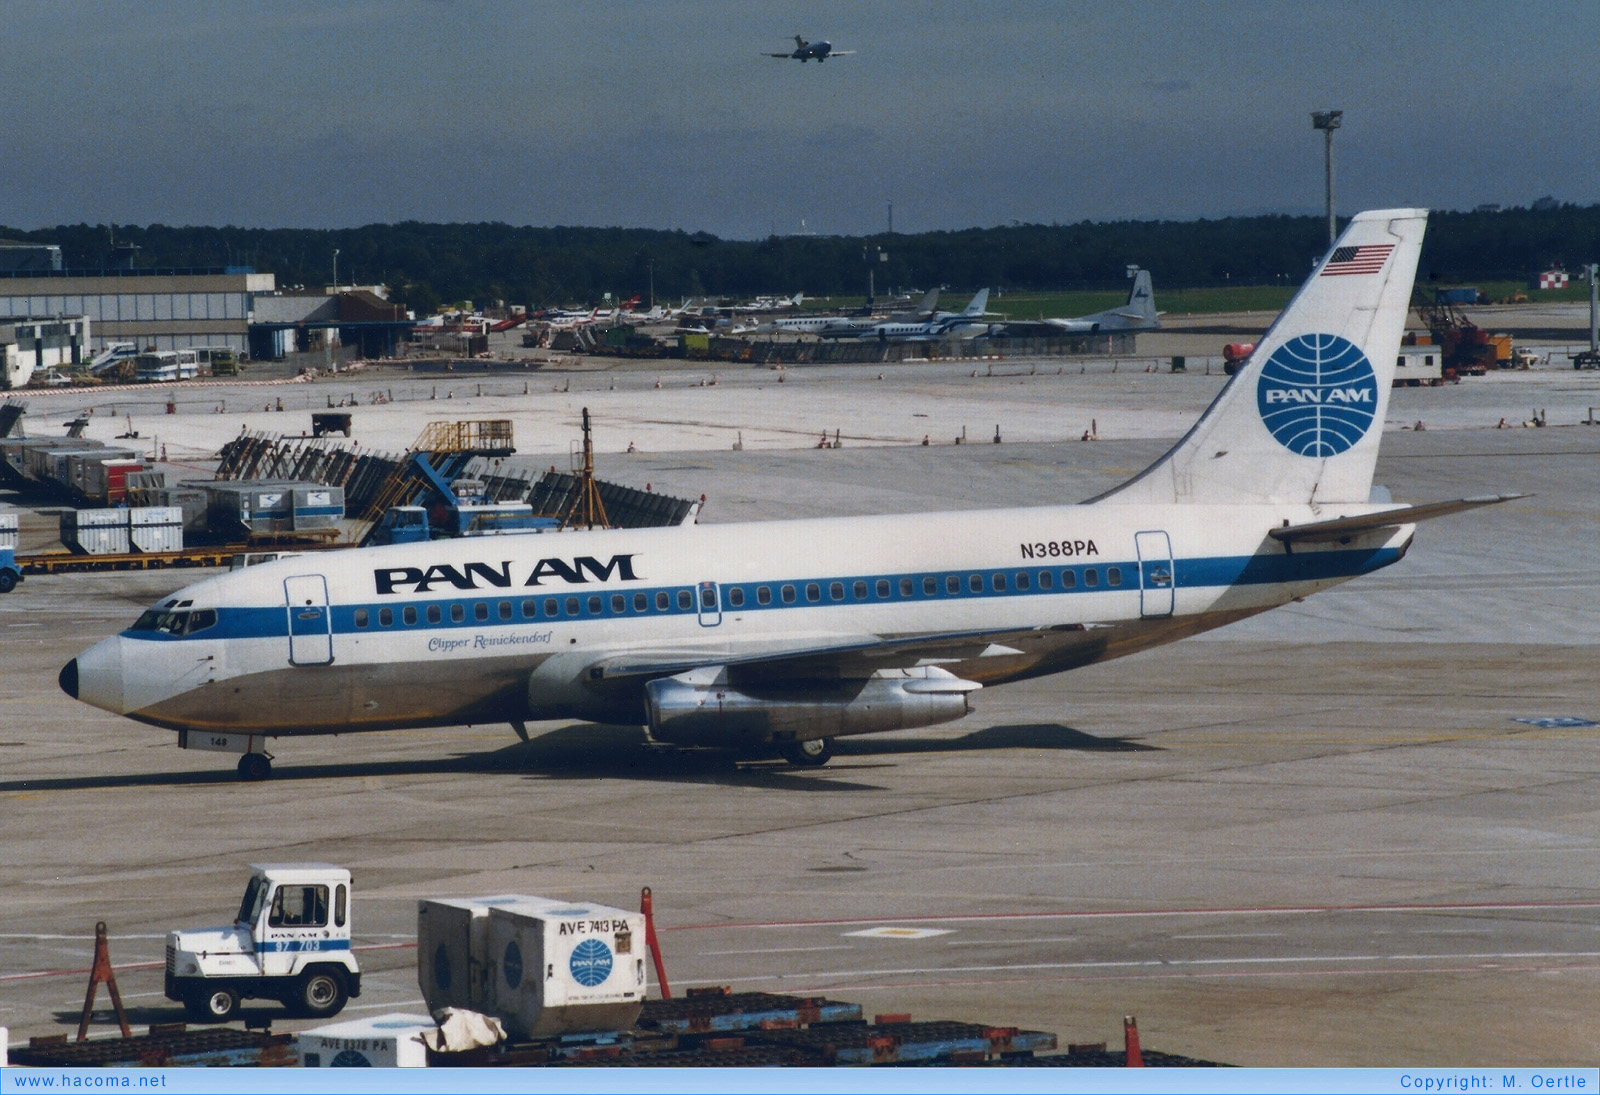 Photo of N388PA - Pan Am Clipper Reinickendorf - Frankfurt International Airport - Sep 1984